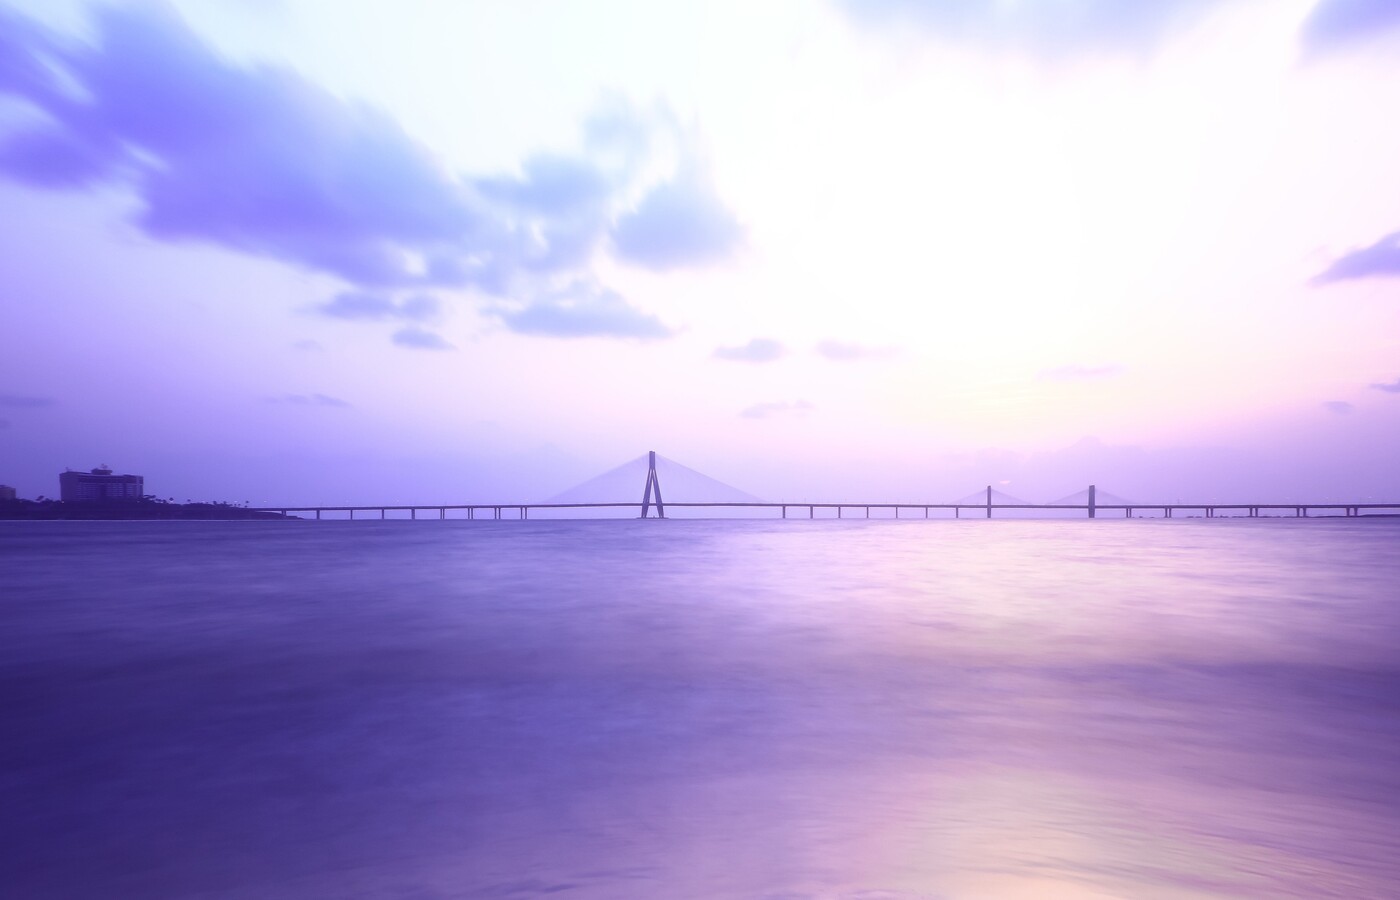 shivaji-park-bridge-india.jpg